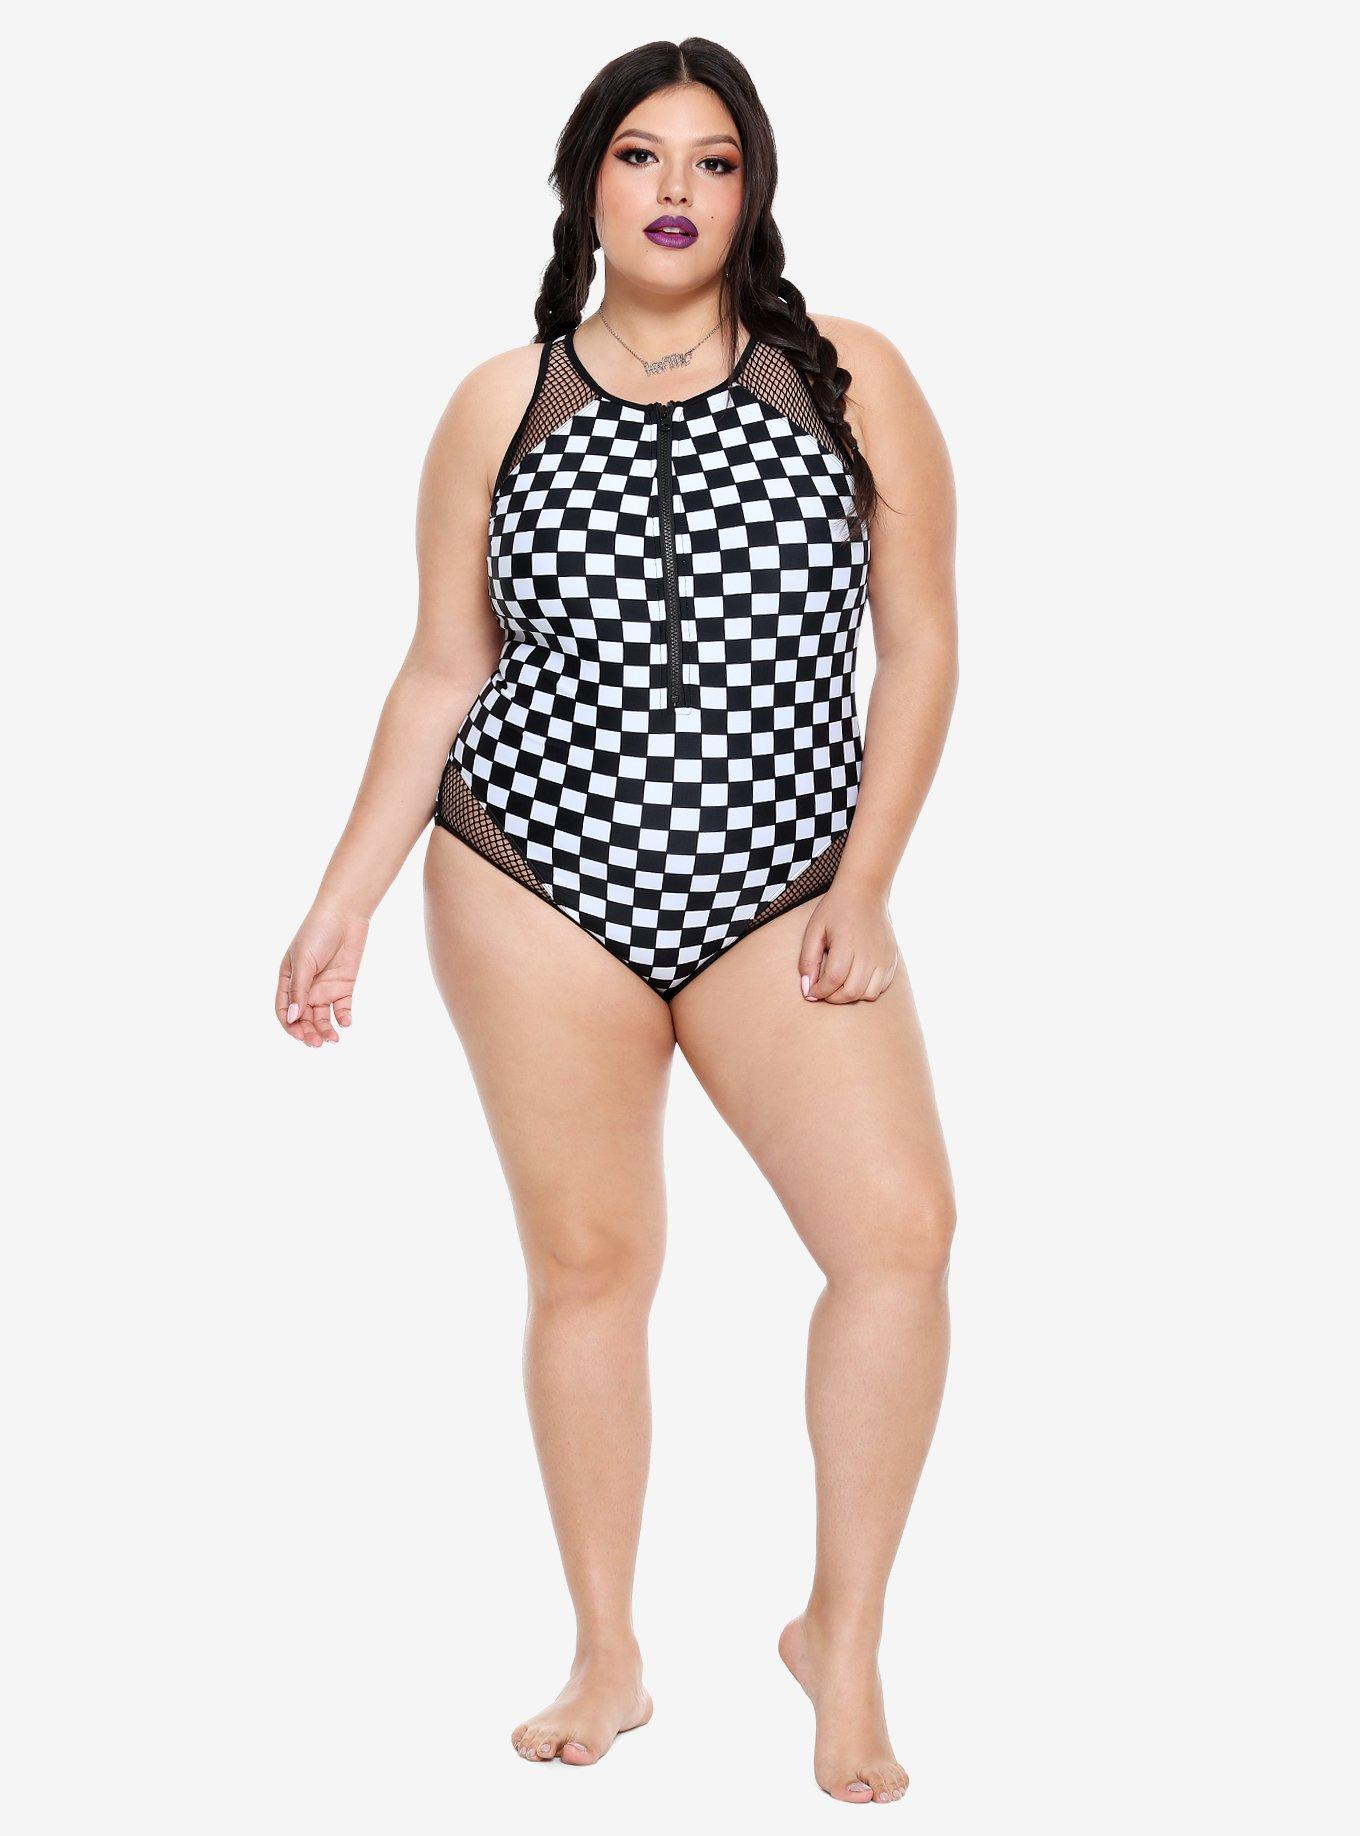 Black & White Checkered Zip-Up Swimsuit Plus Size, , alternate